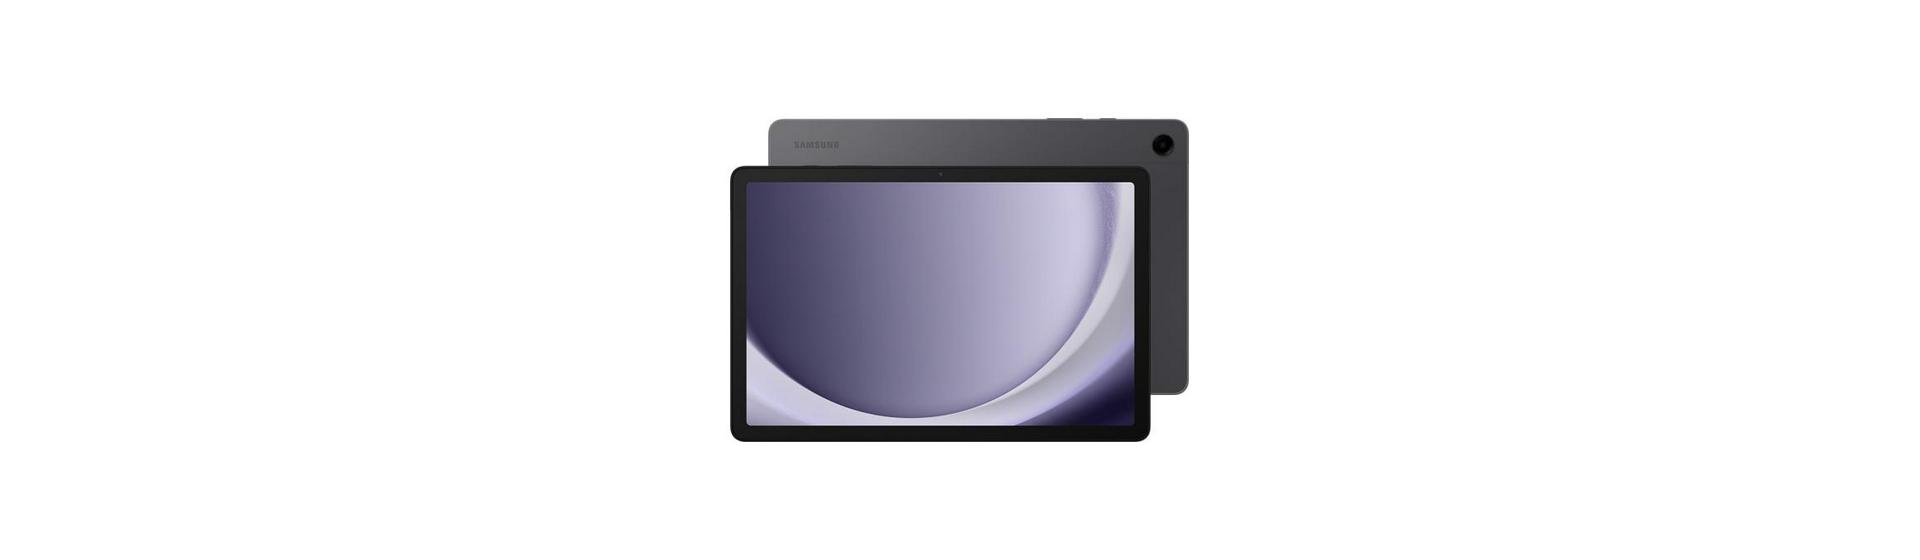 Promoção: Tablet Samsung Galaxy Tab A9 Plus por R$1169,10*